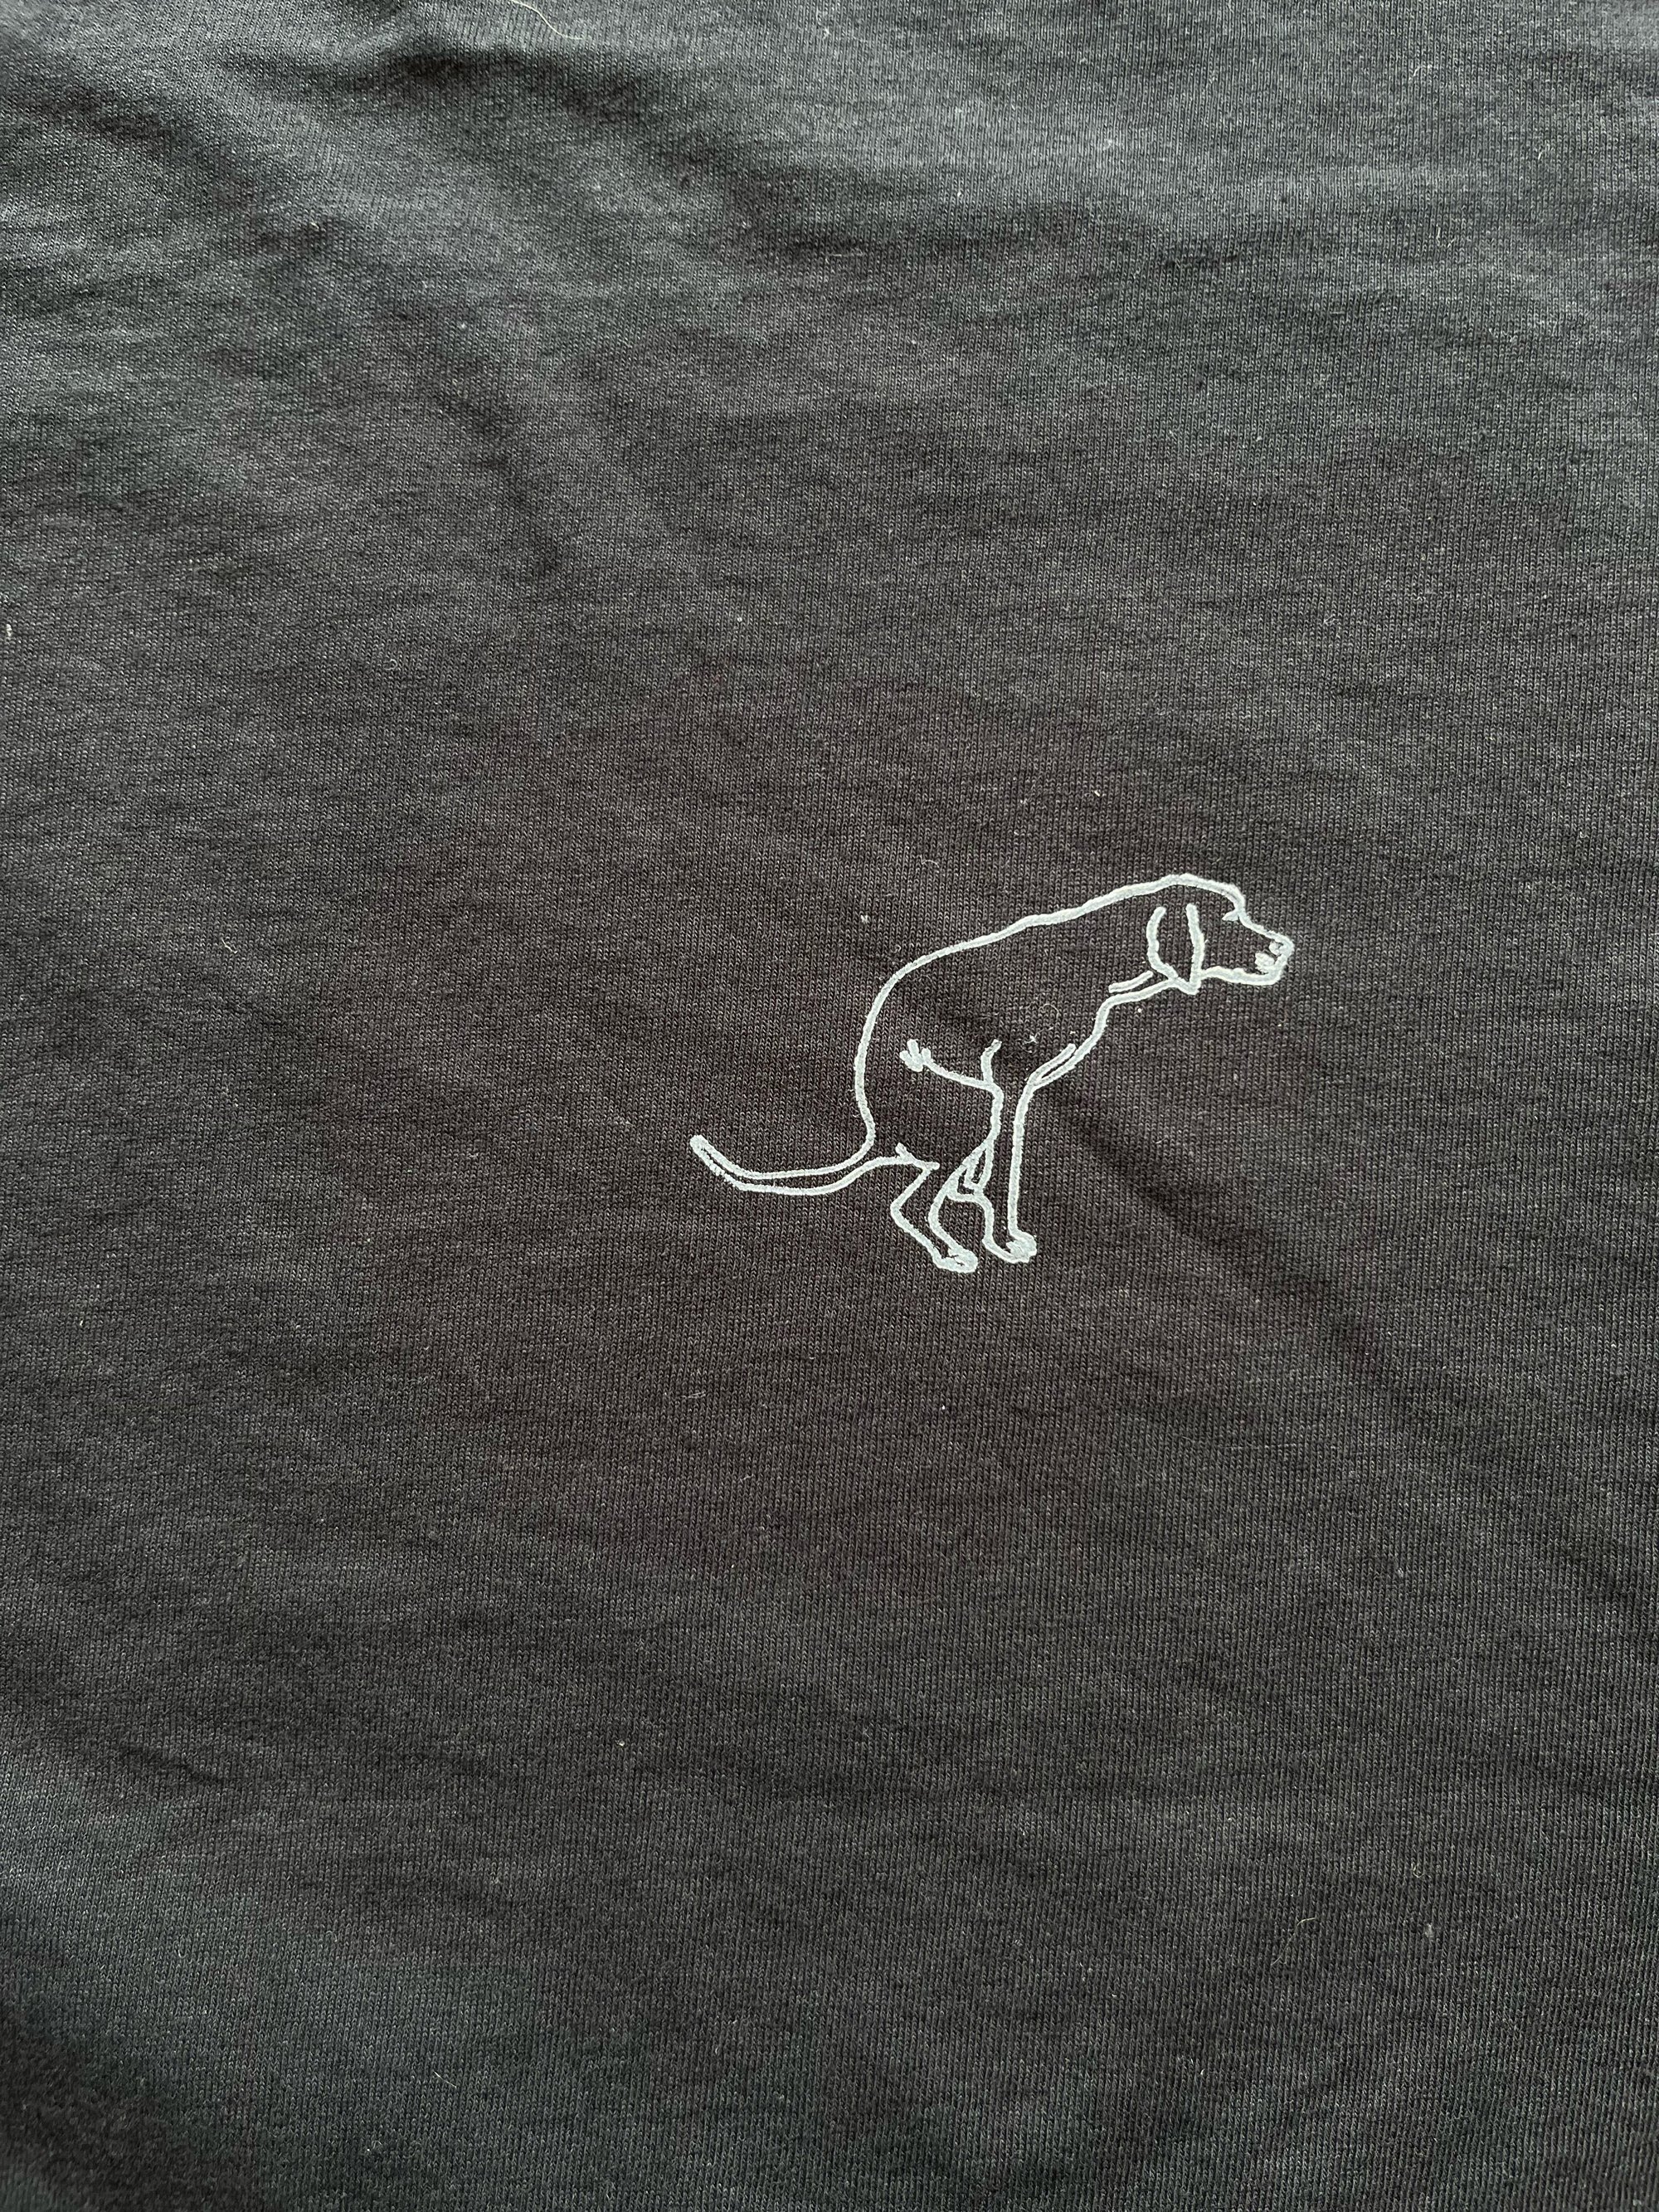 Image of Dog squat tshirt (screen print)